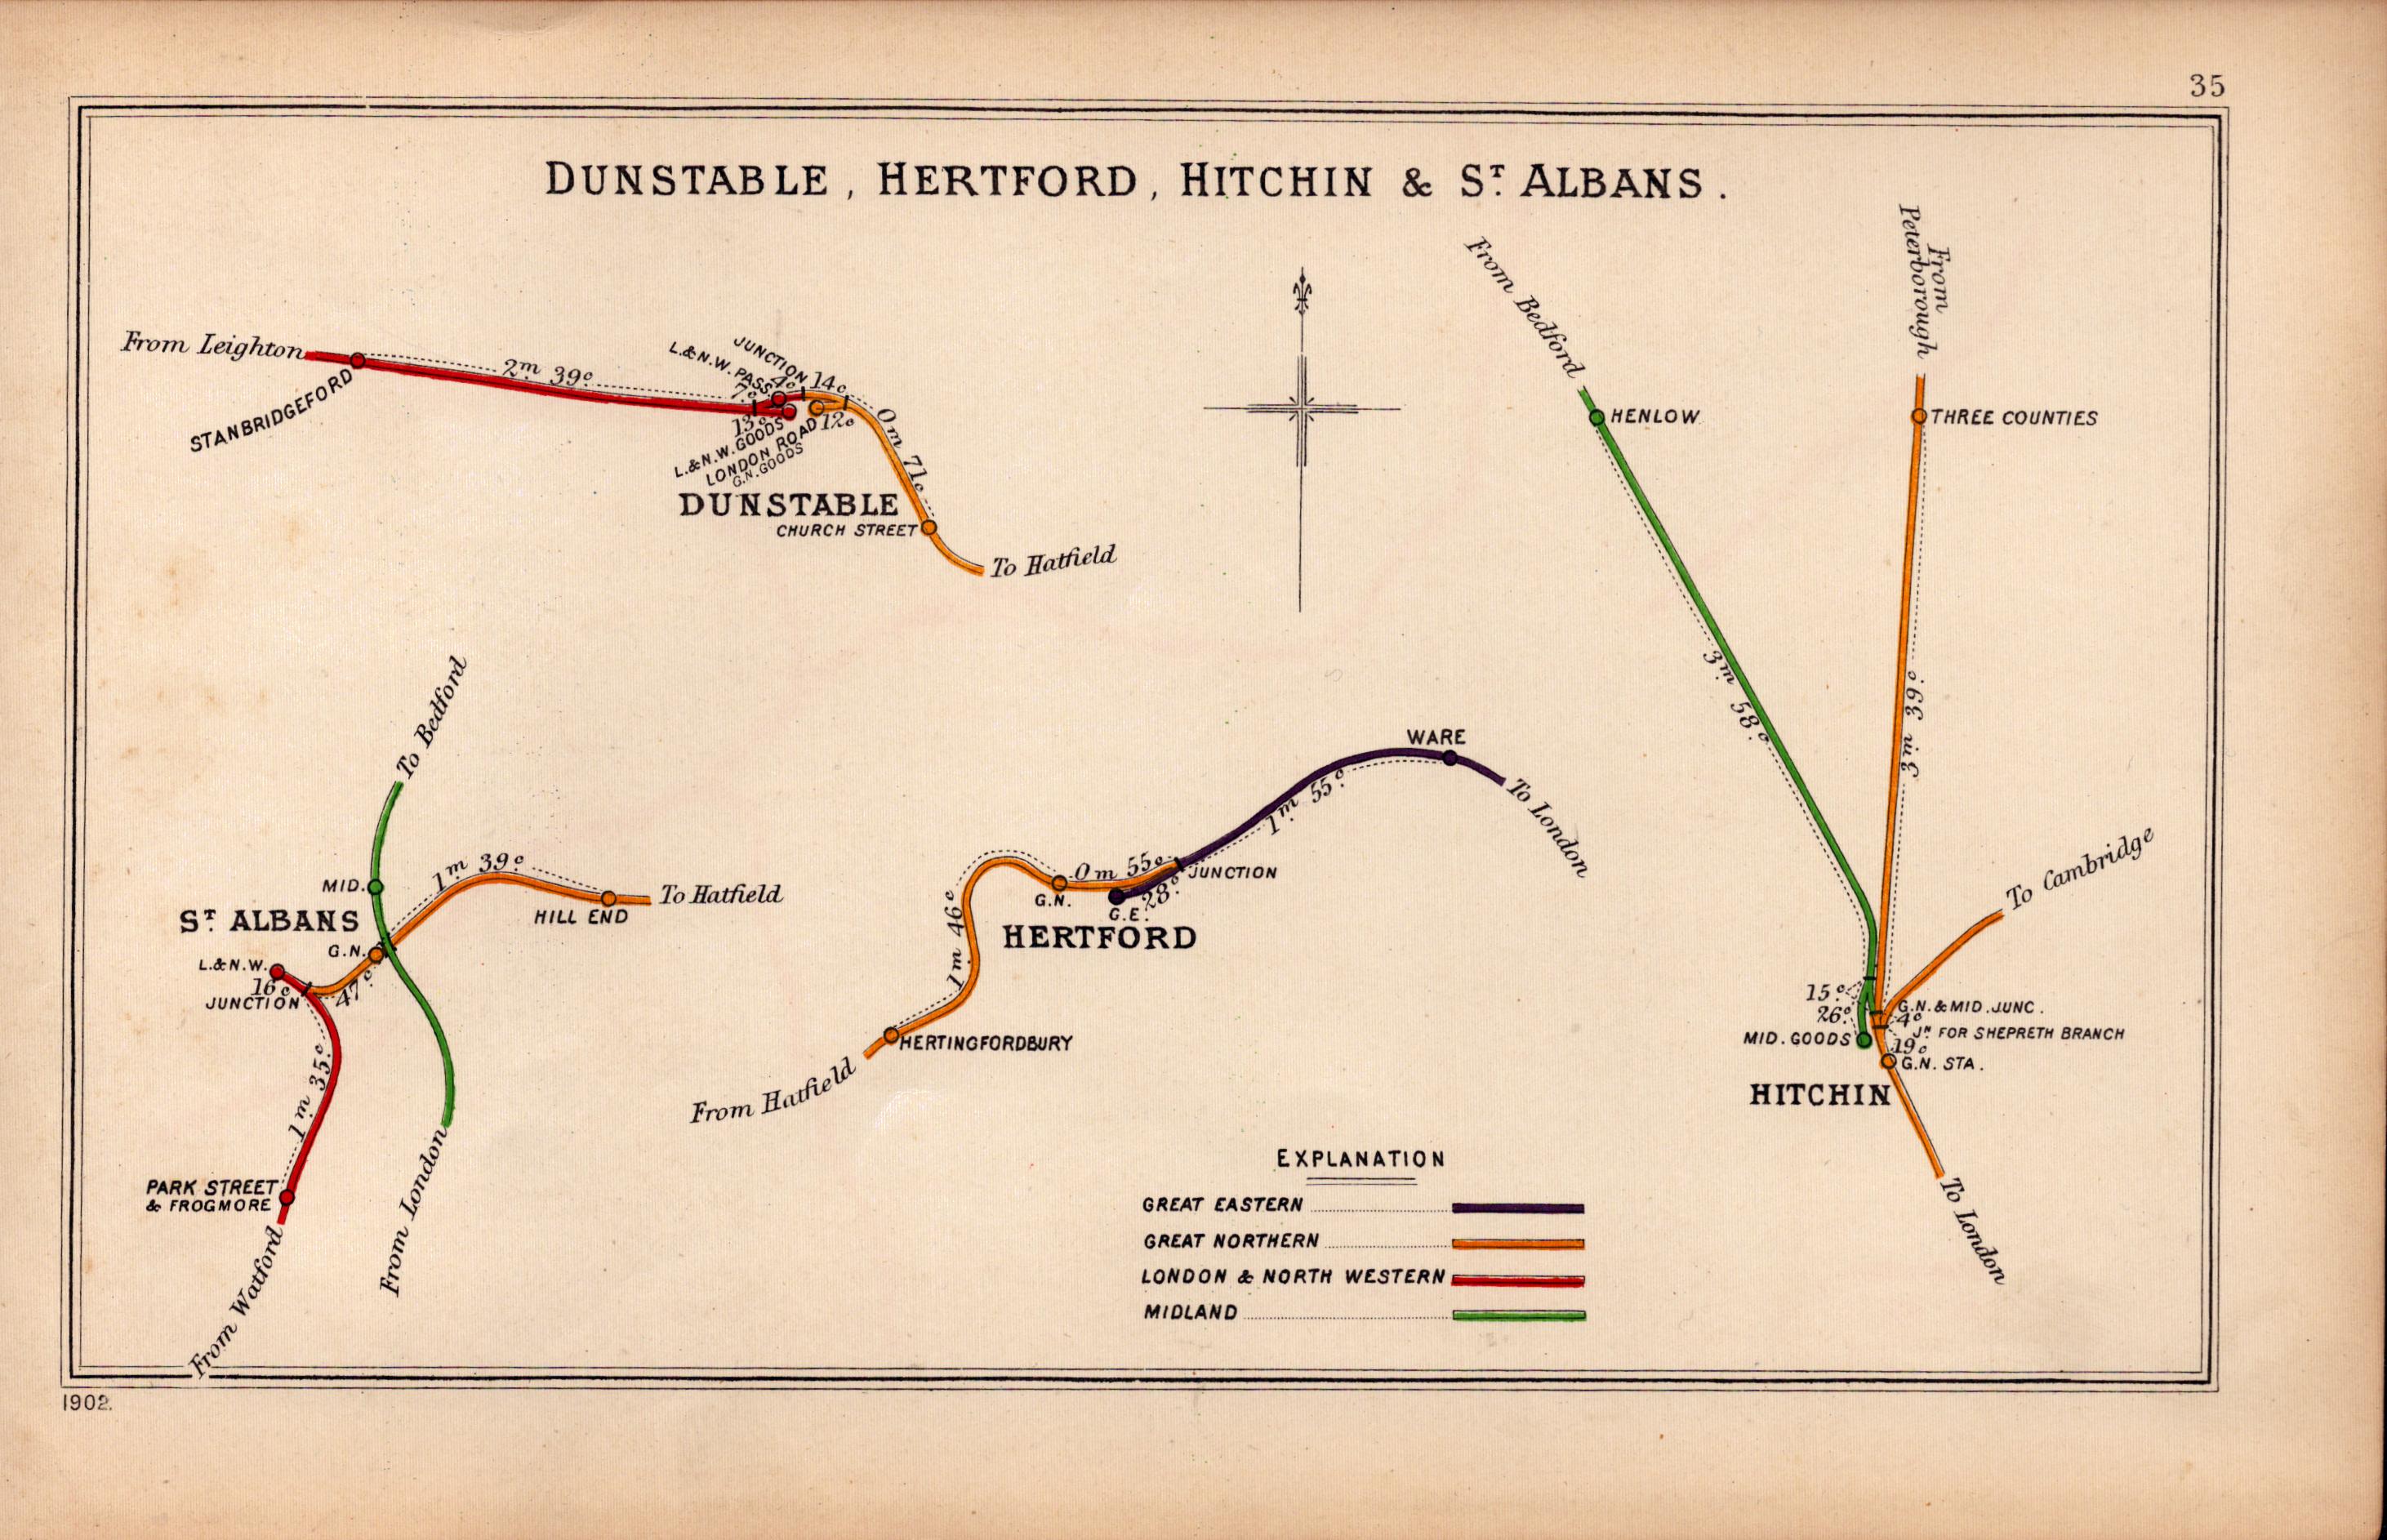 Dunstable, Hertford, Hitchin, St Albans Antique Railway Diagram-35.